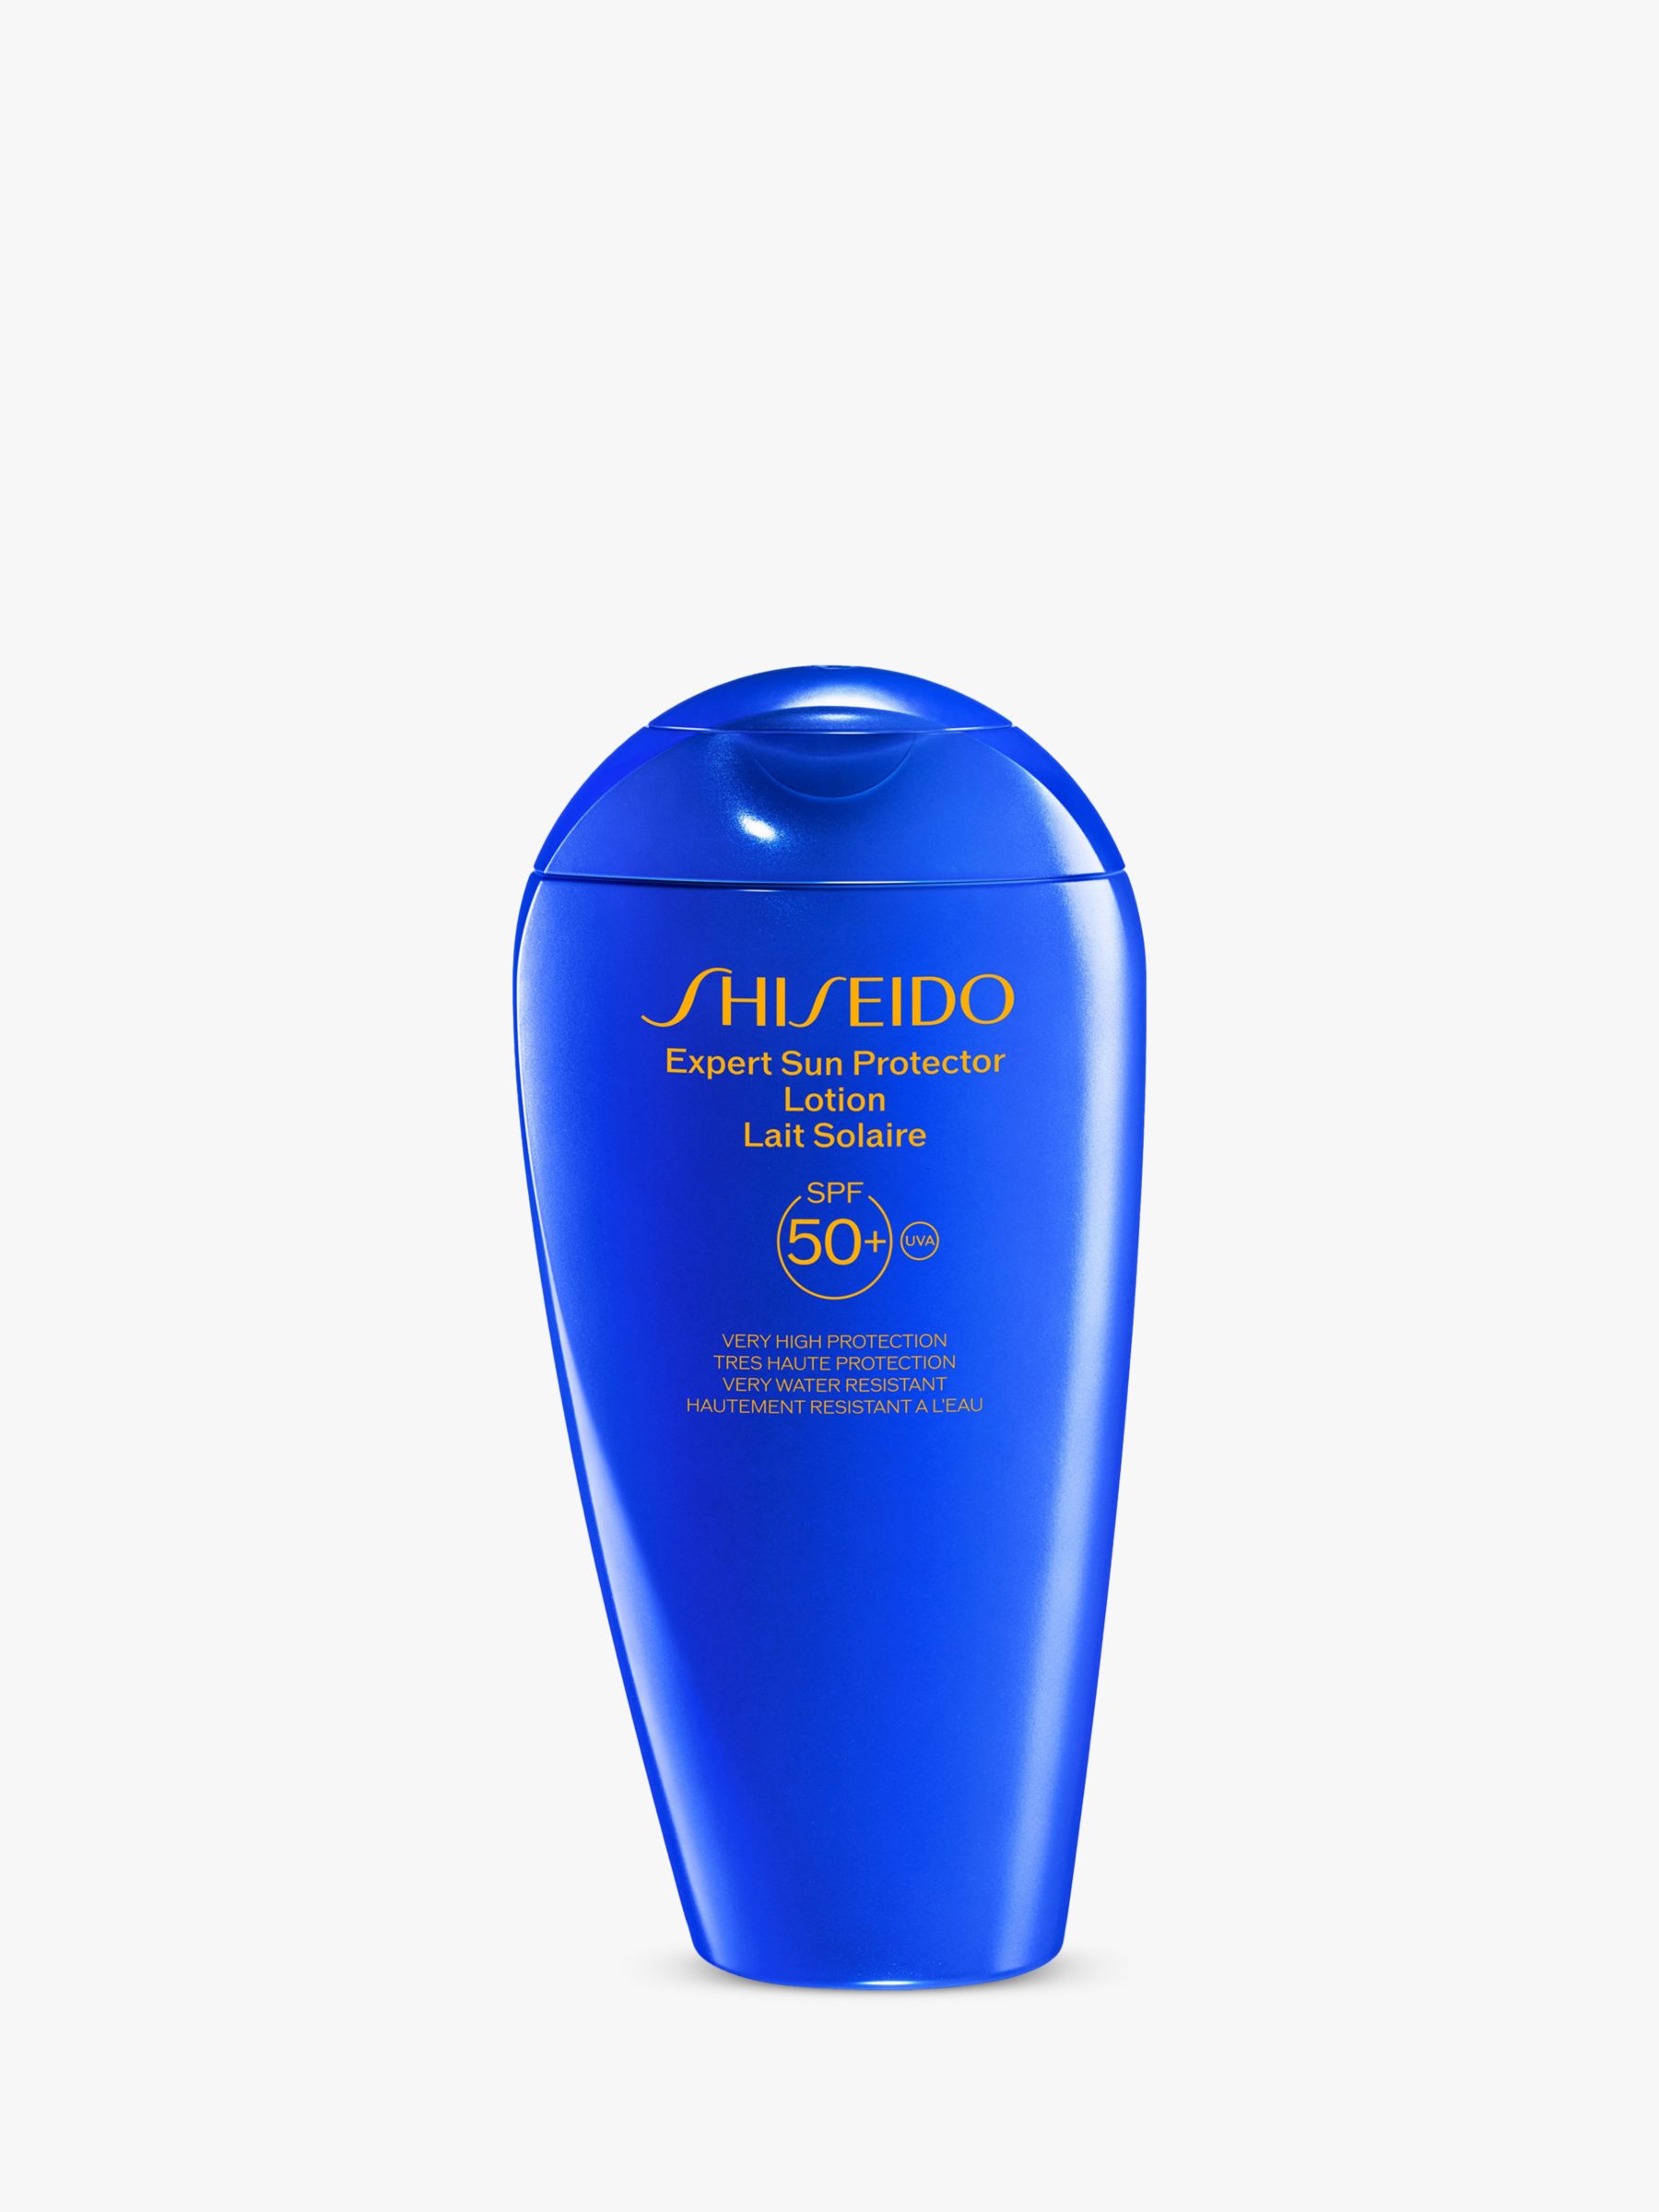 Shiseido Expert Sun Protector Lotion SPF 50+, 300ml 1